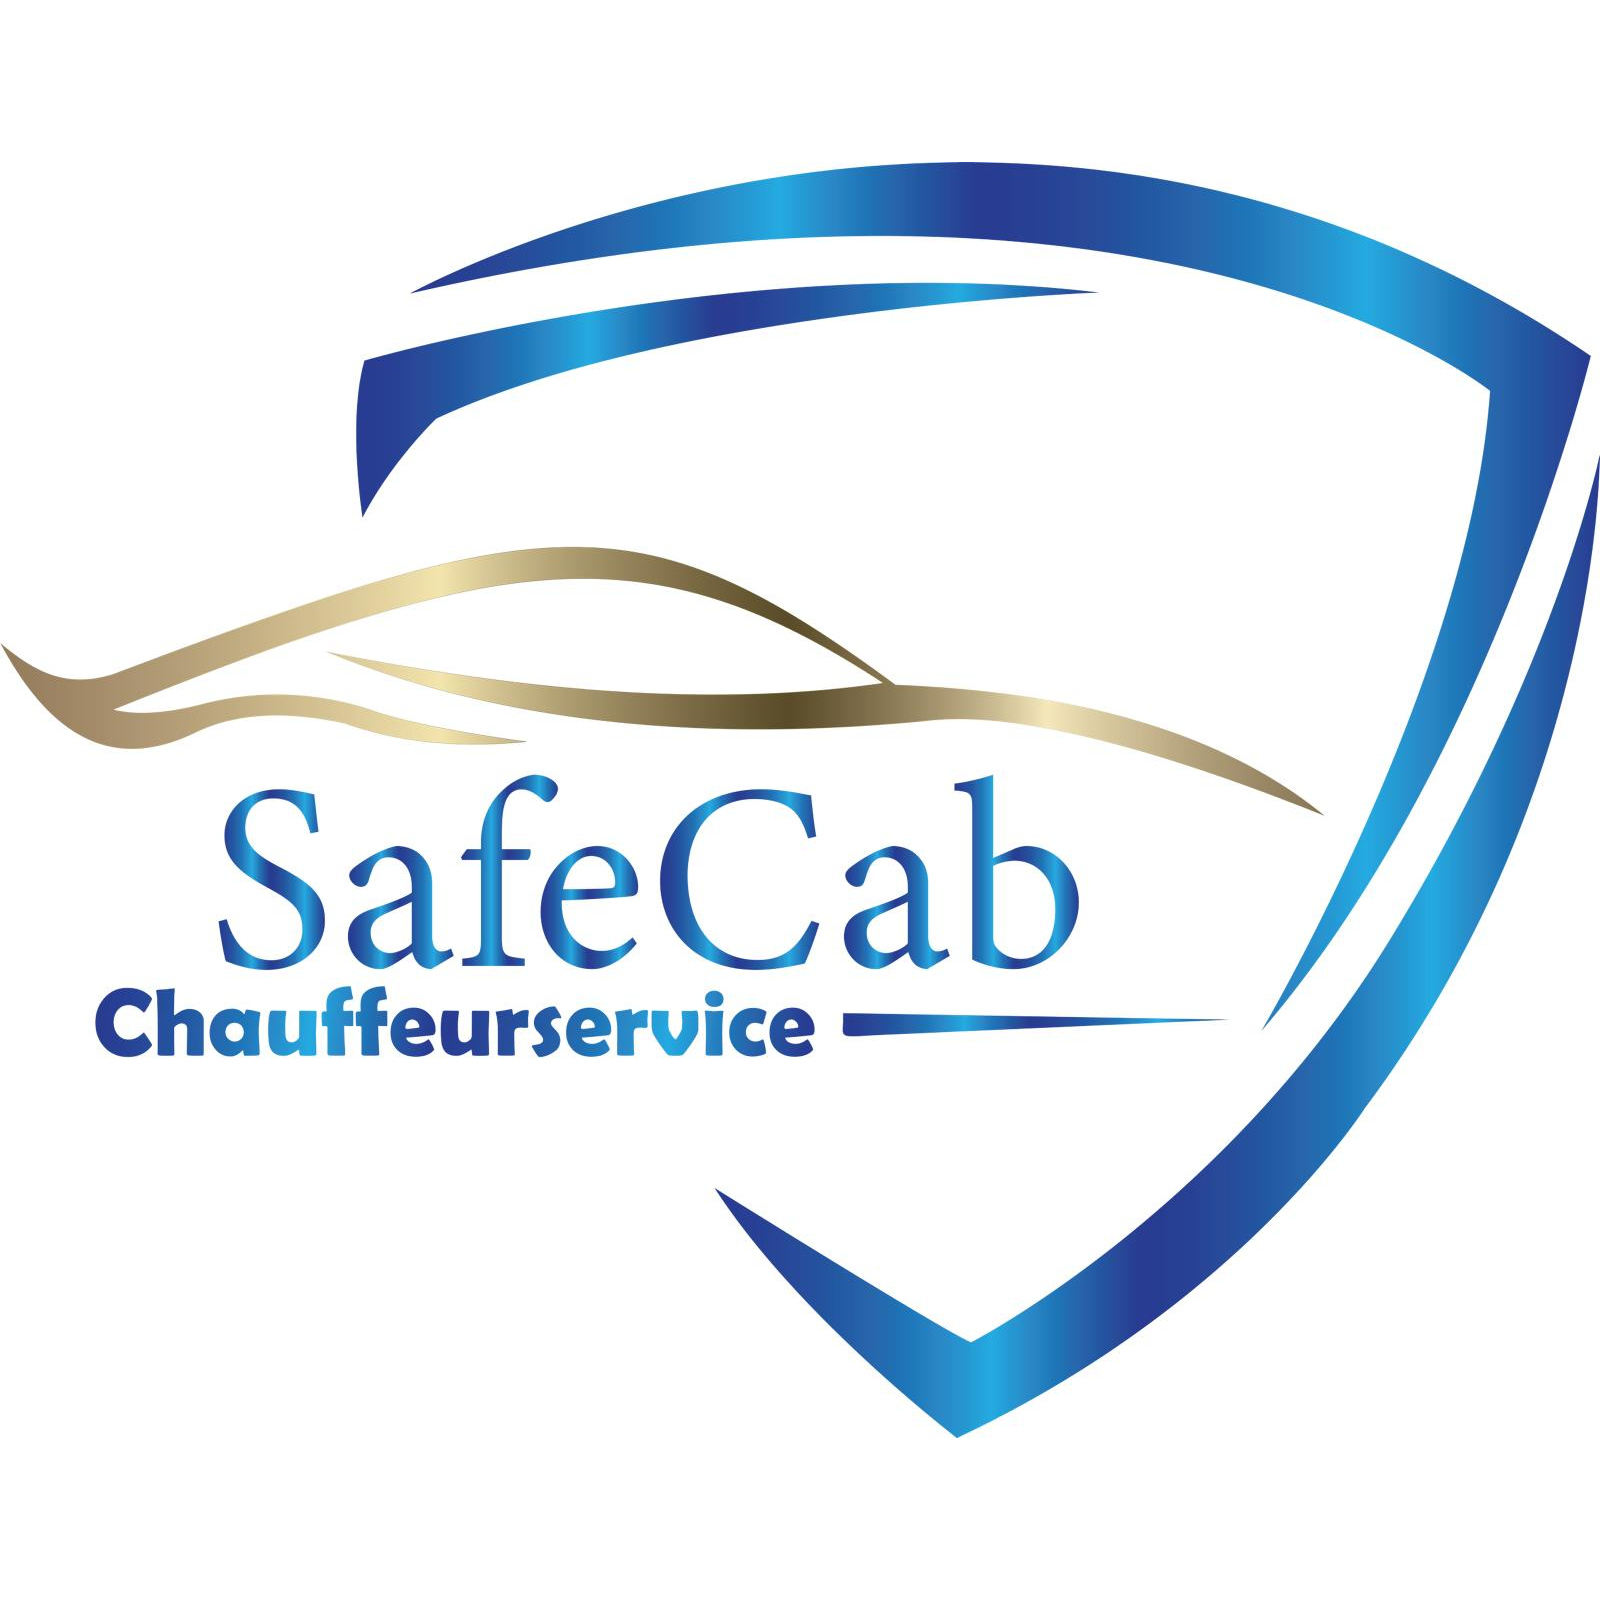 SafeCab Chauffeurservice Logo